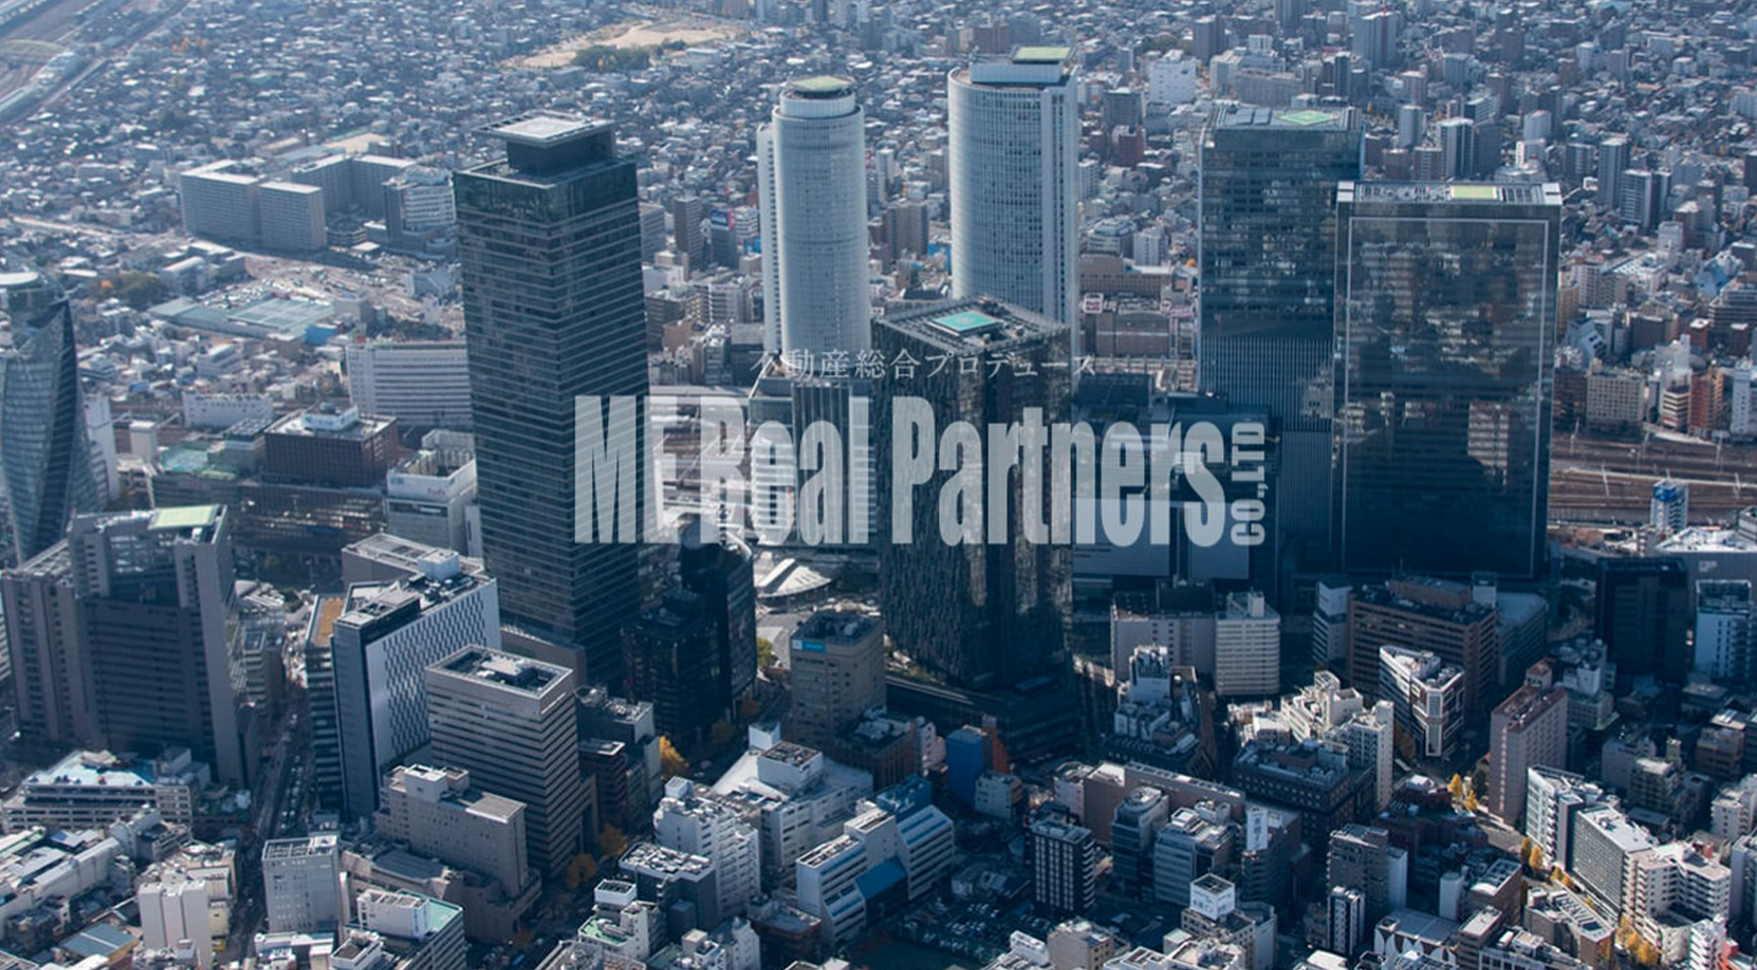 ME Real Partners株式会社